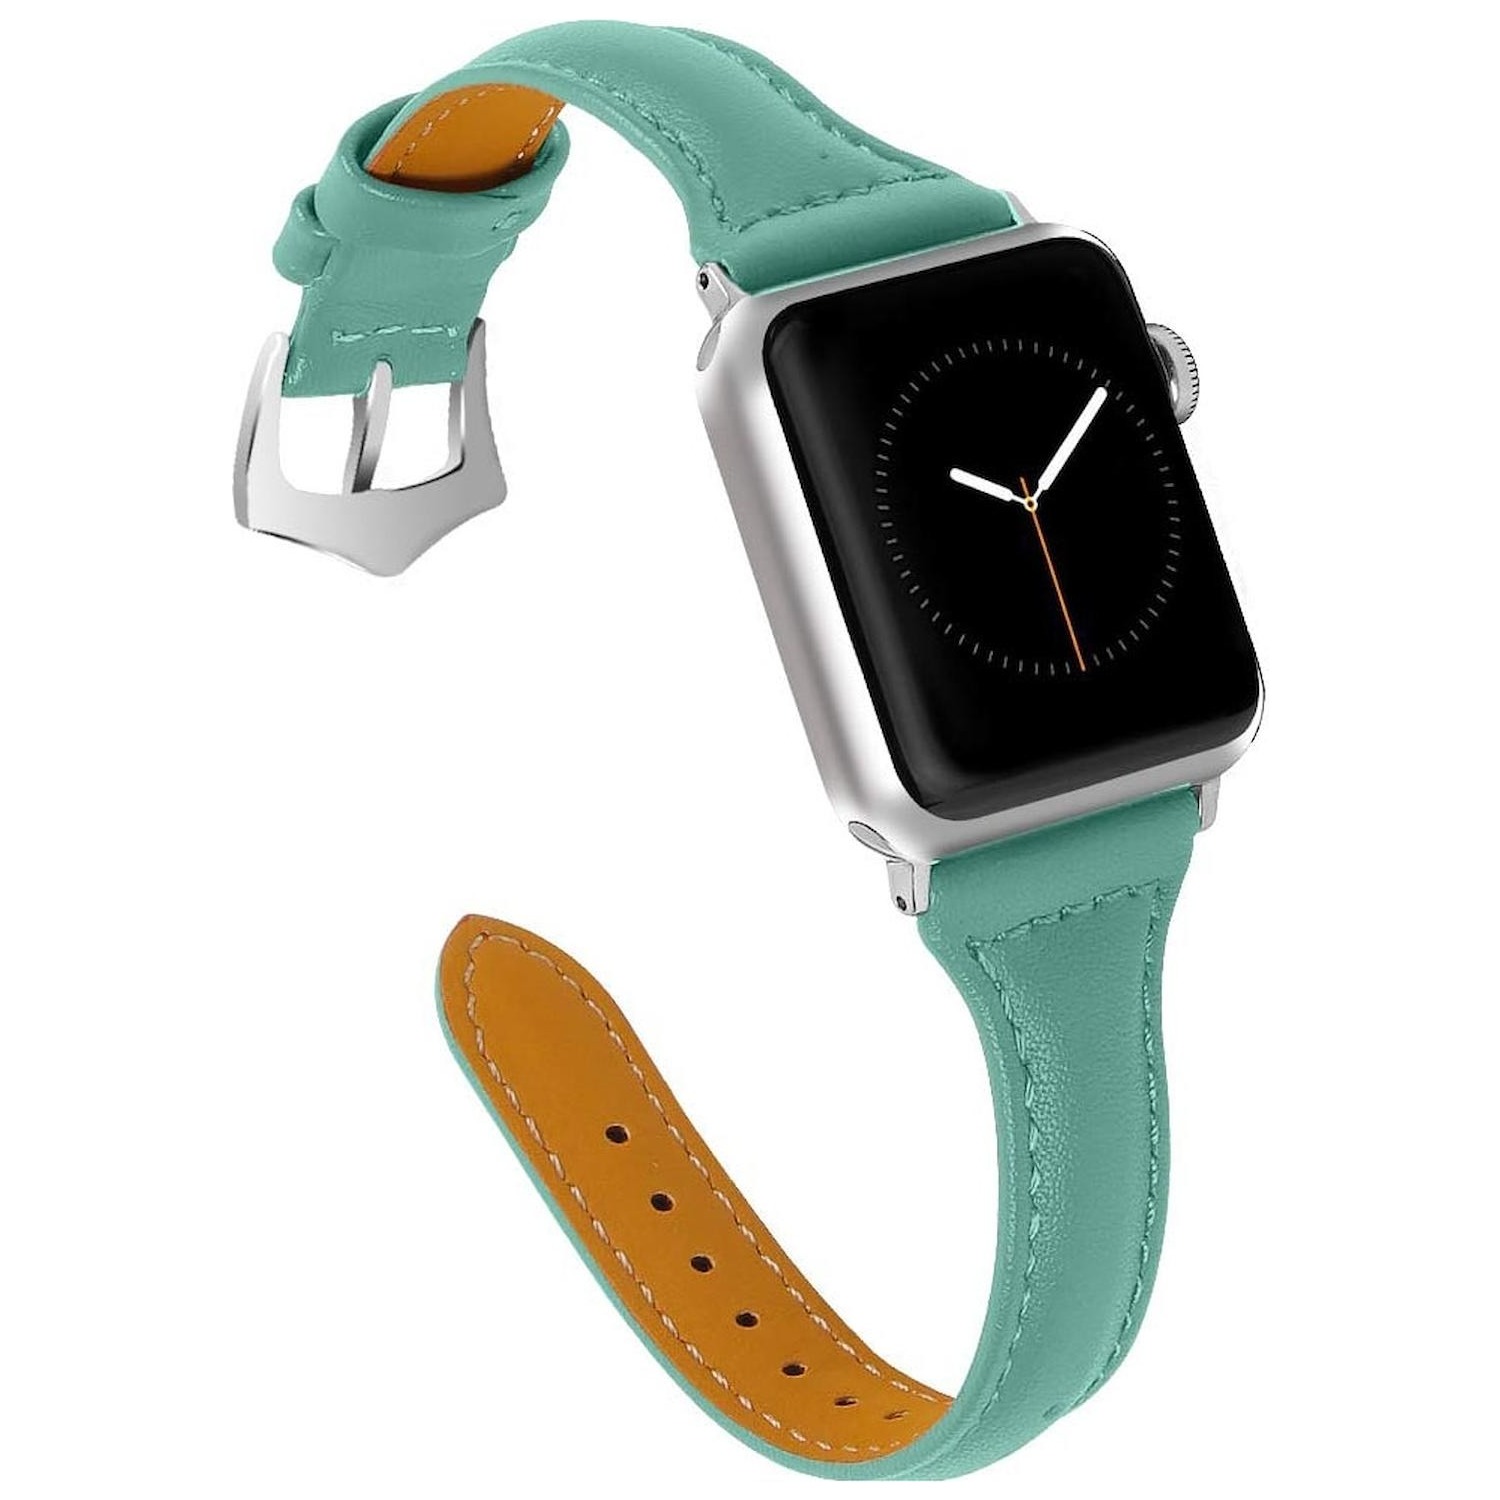 Immagine per Cinturino AAAmaze AMAA0033 per Apple watch 38/40mm in pelle teal azzurro da DIMOStore